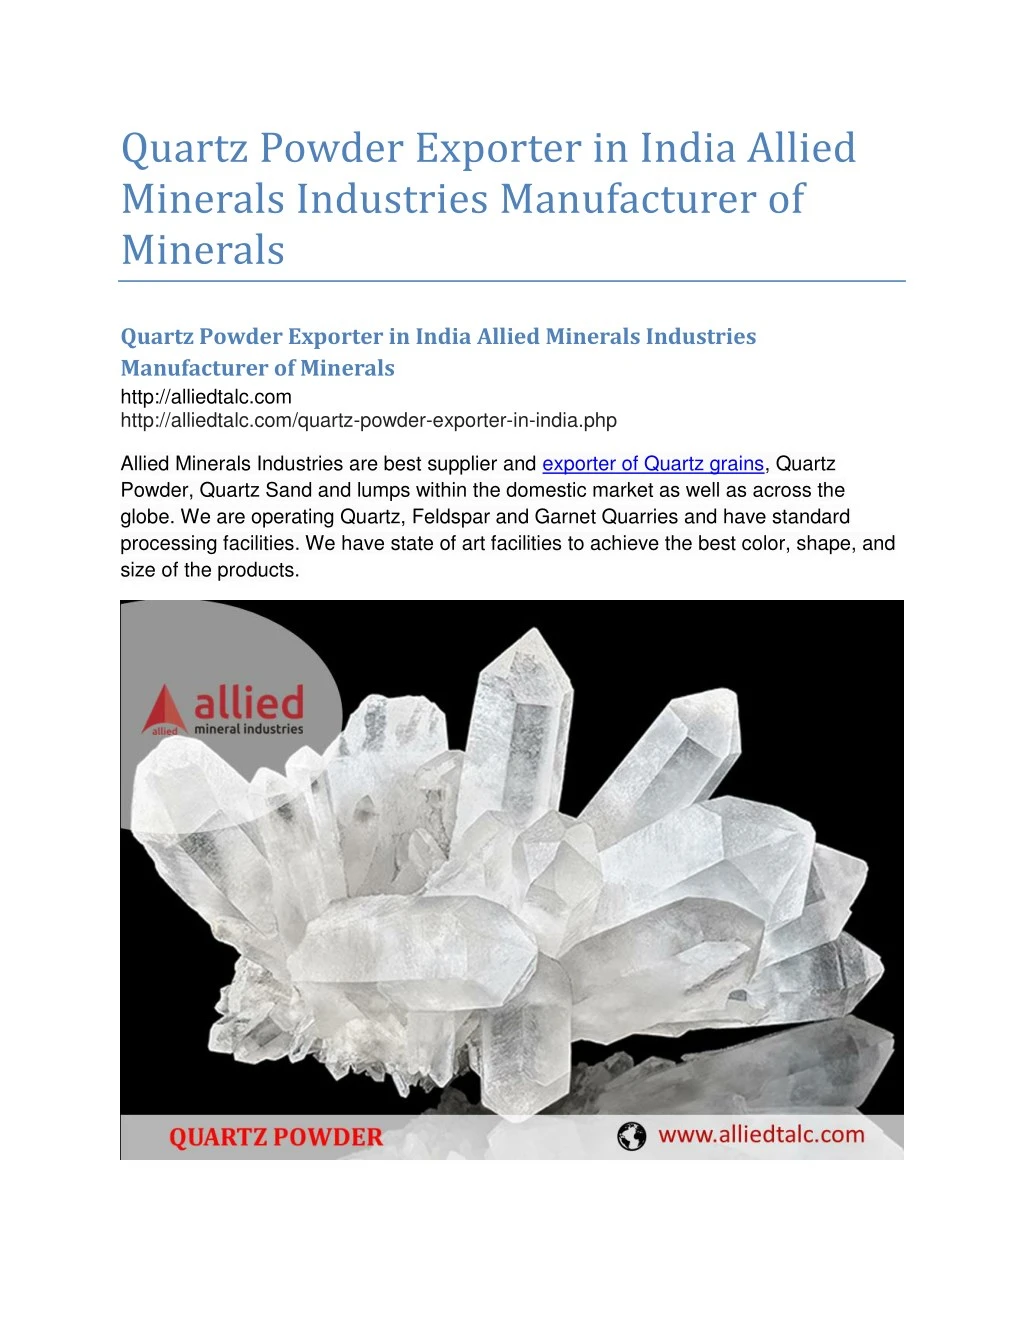 quartz powder exporter in india allied minerals